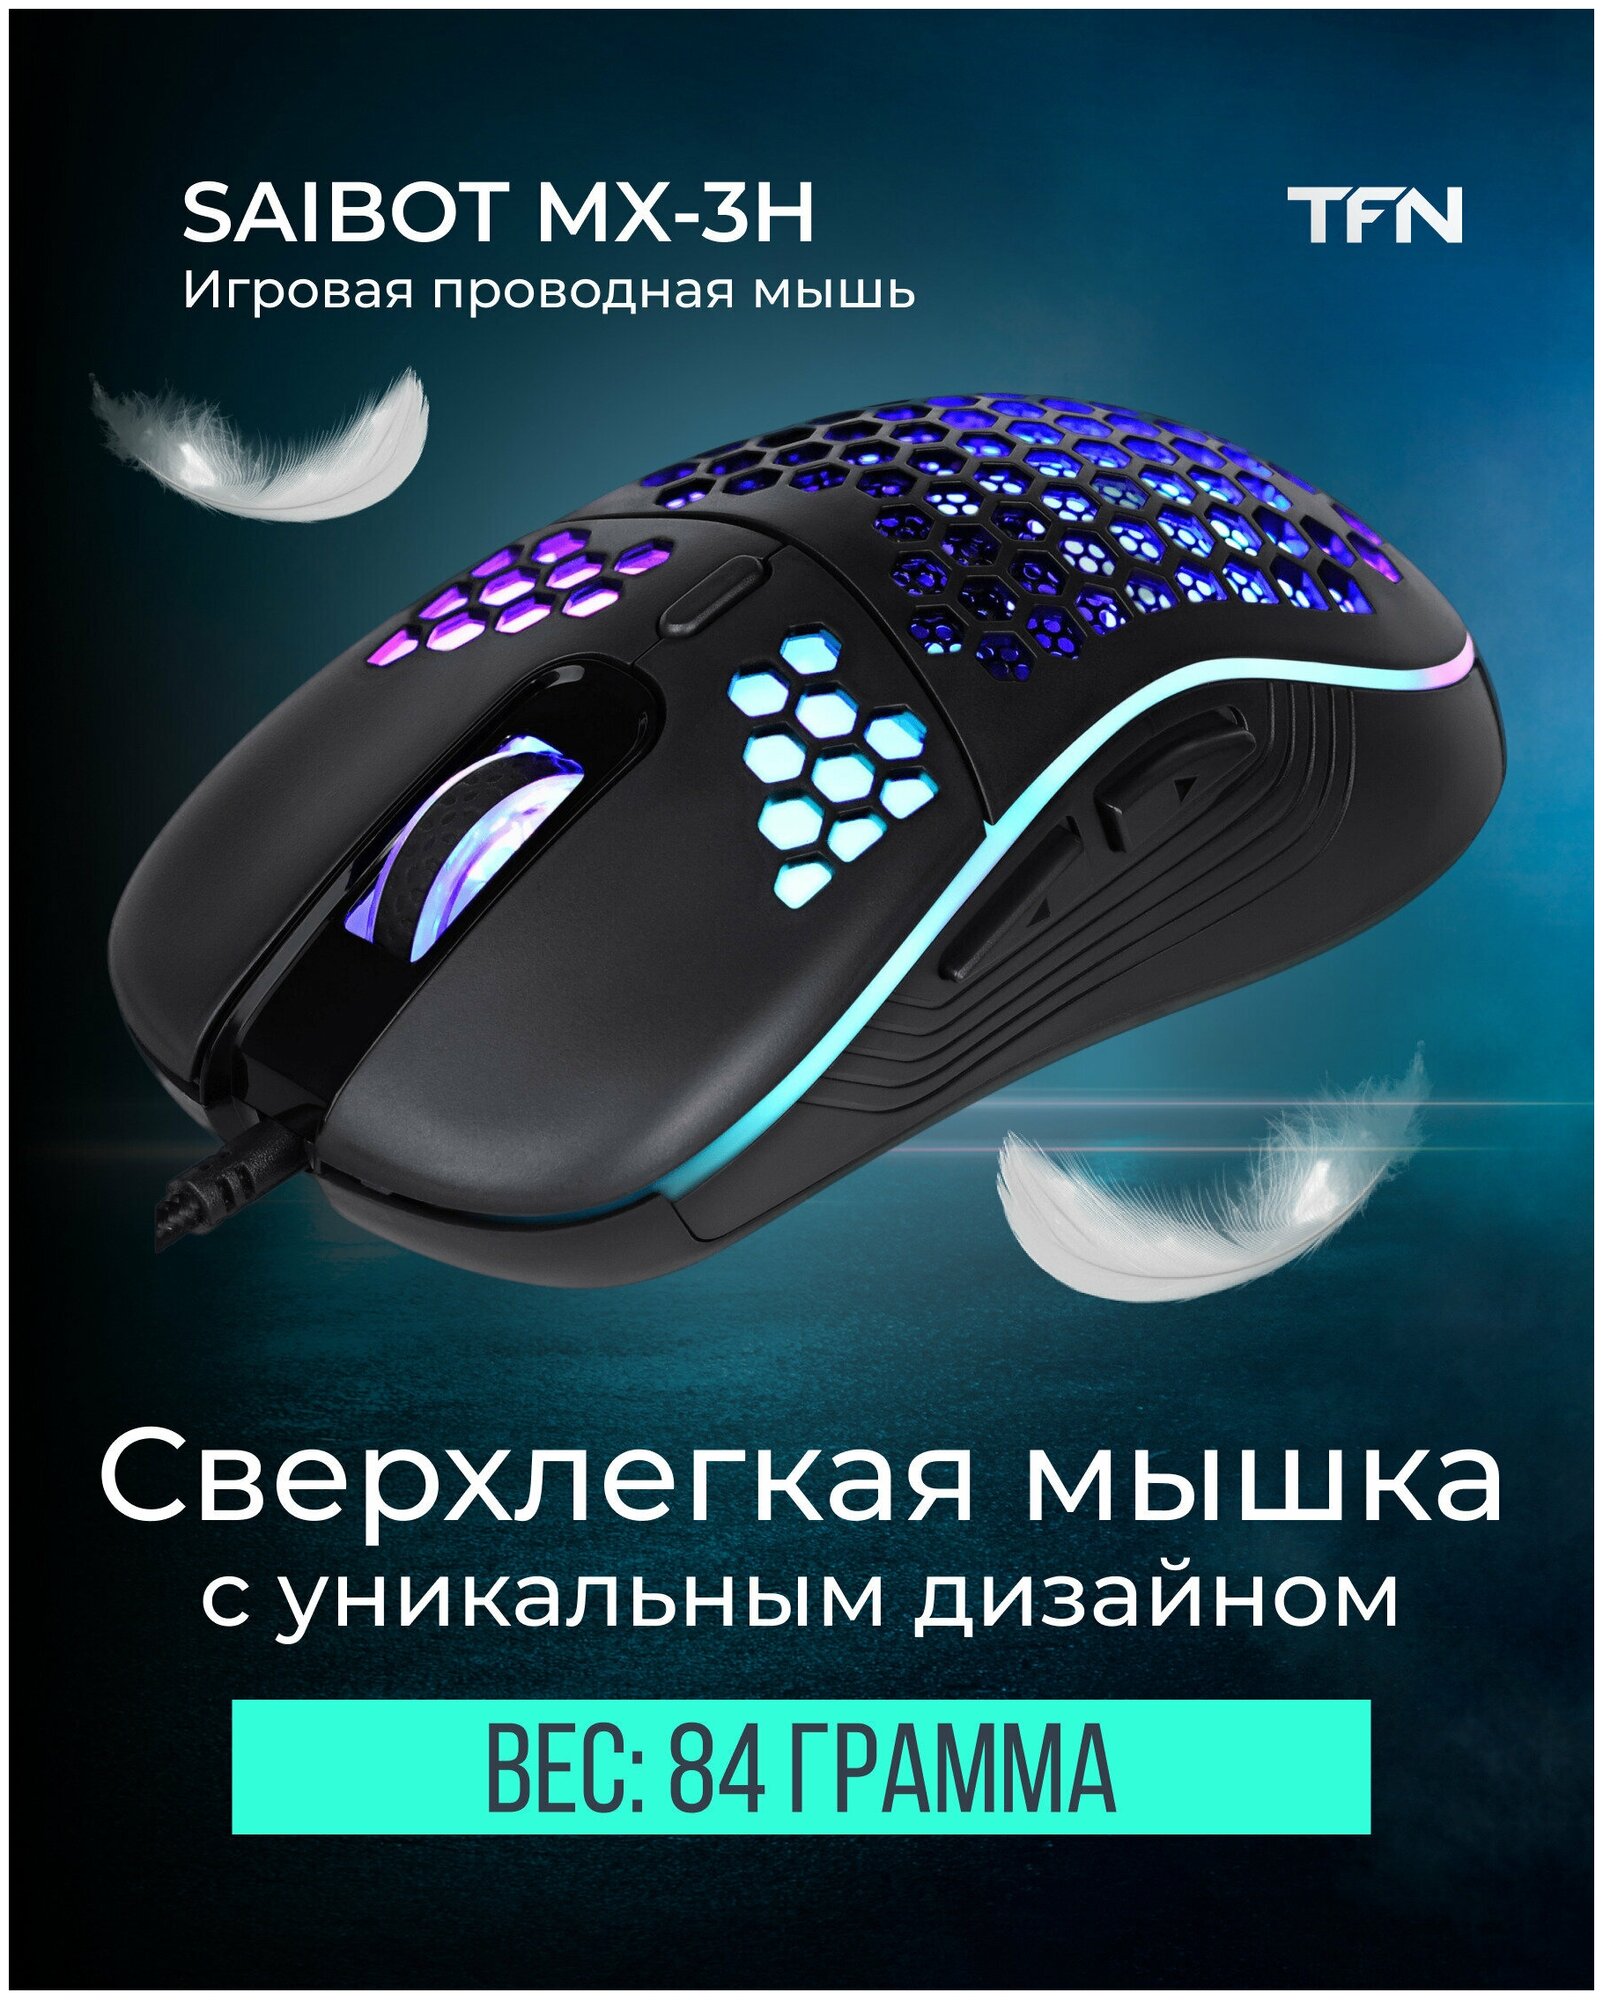 Мышка TFN Saibot MX-3H black